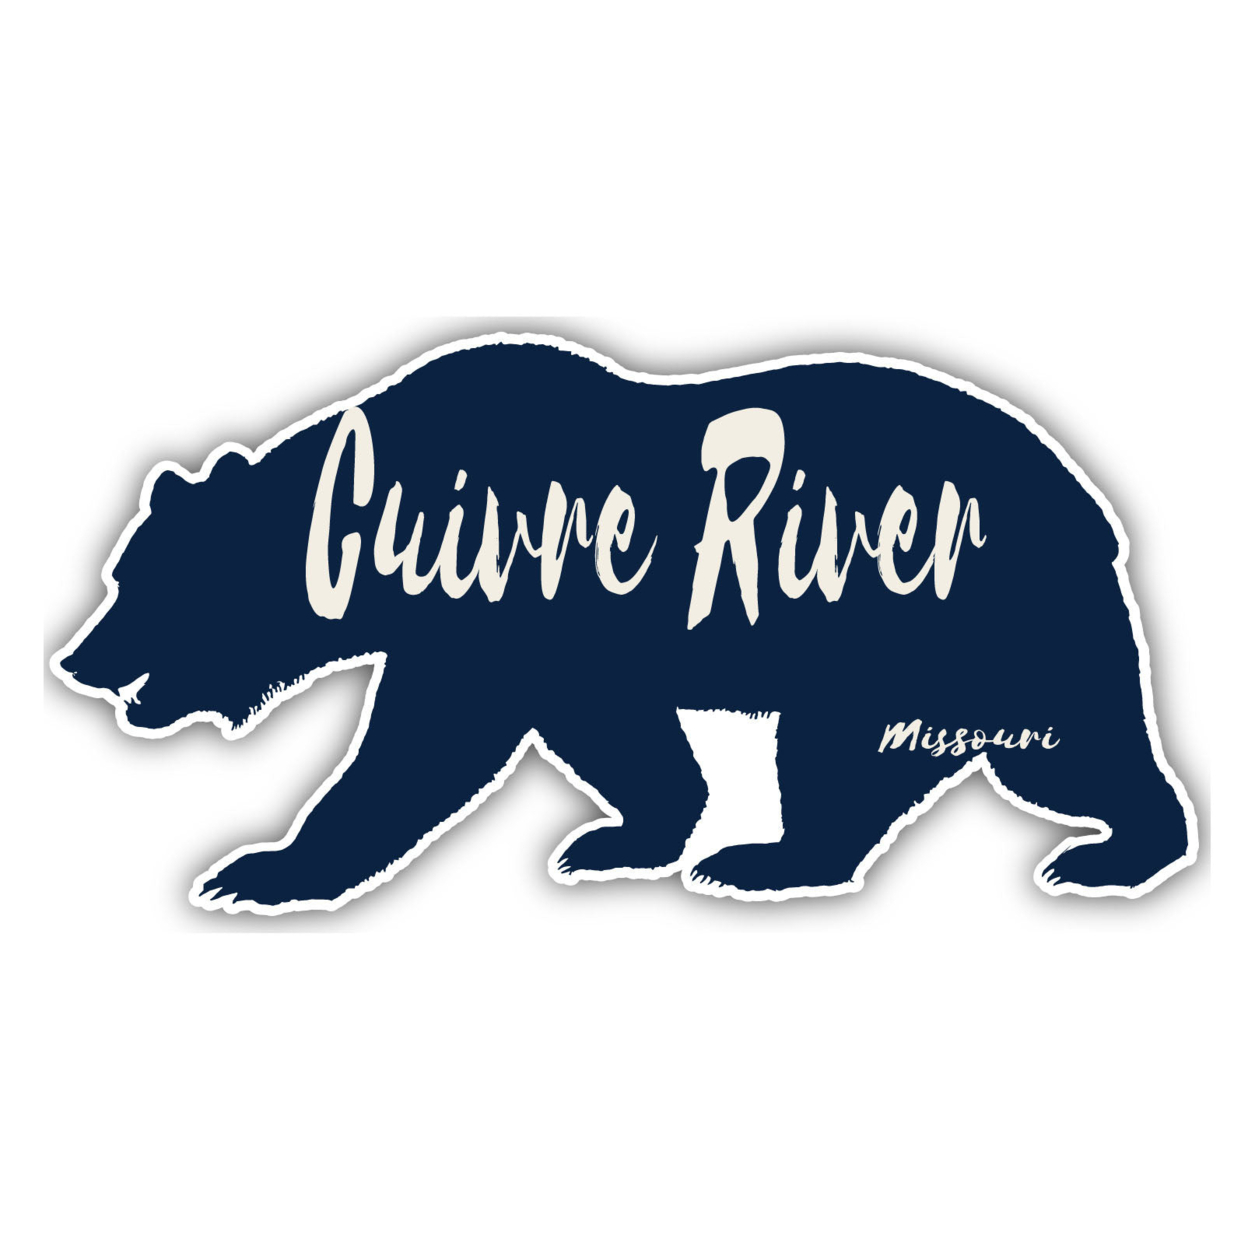 Cuivre River Missouri Souvenir Decorative Stickers (Choose Theme And Size) - 4-Pack, 8-Inch, Bear